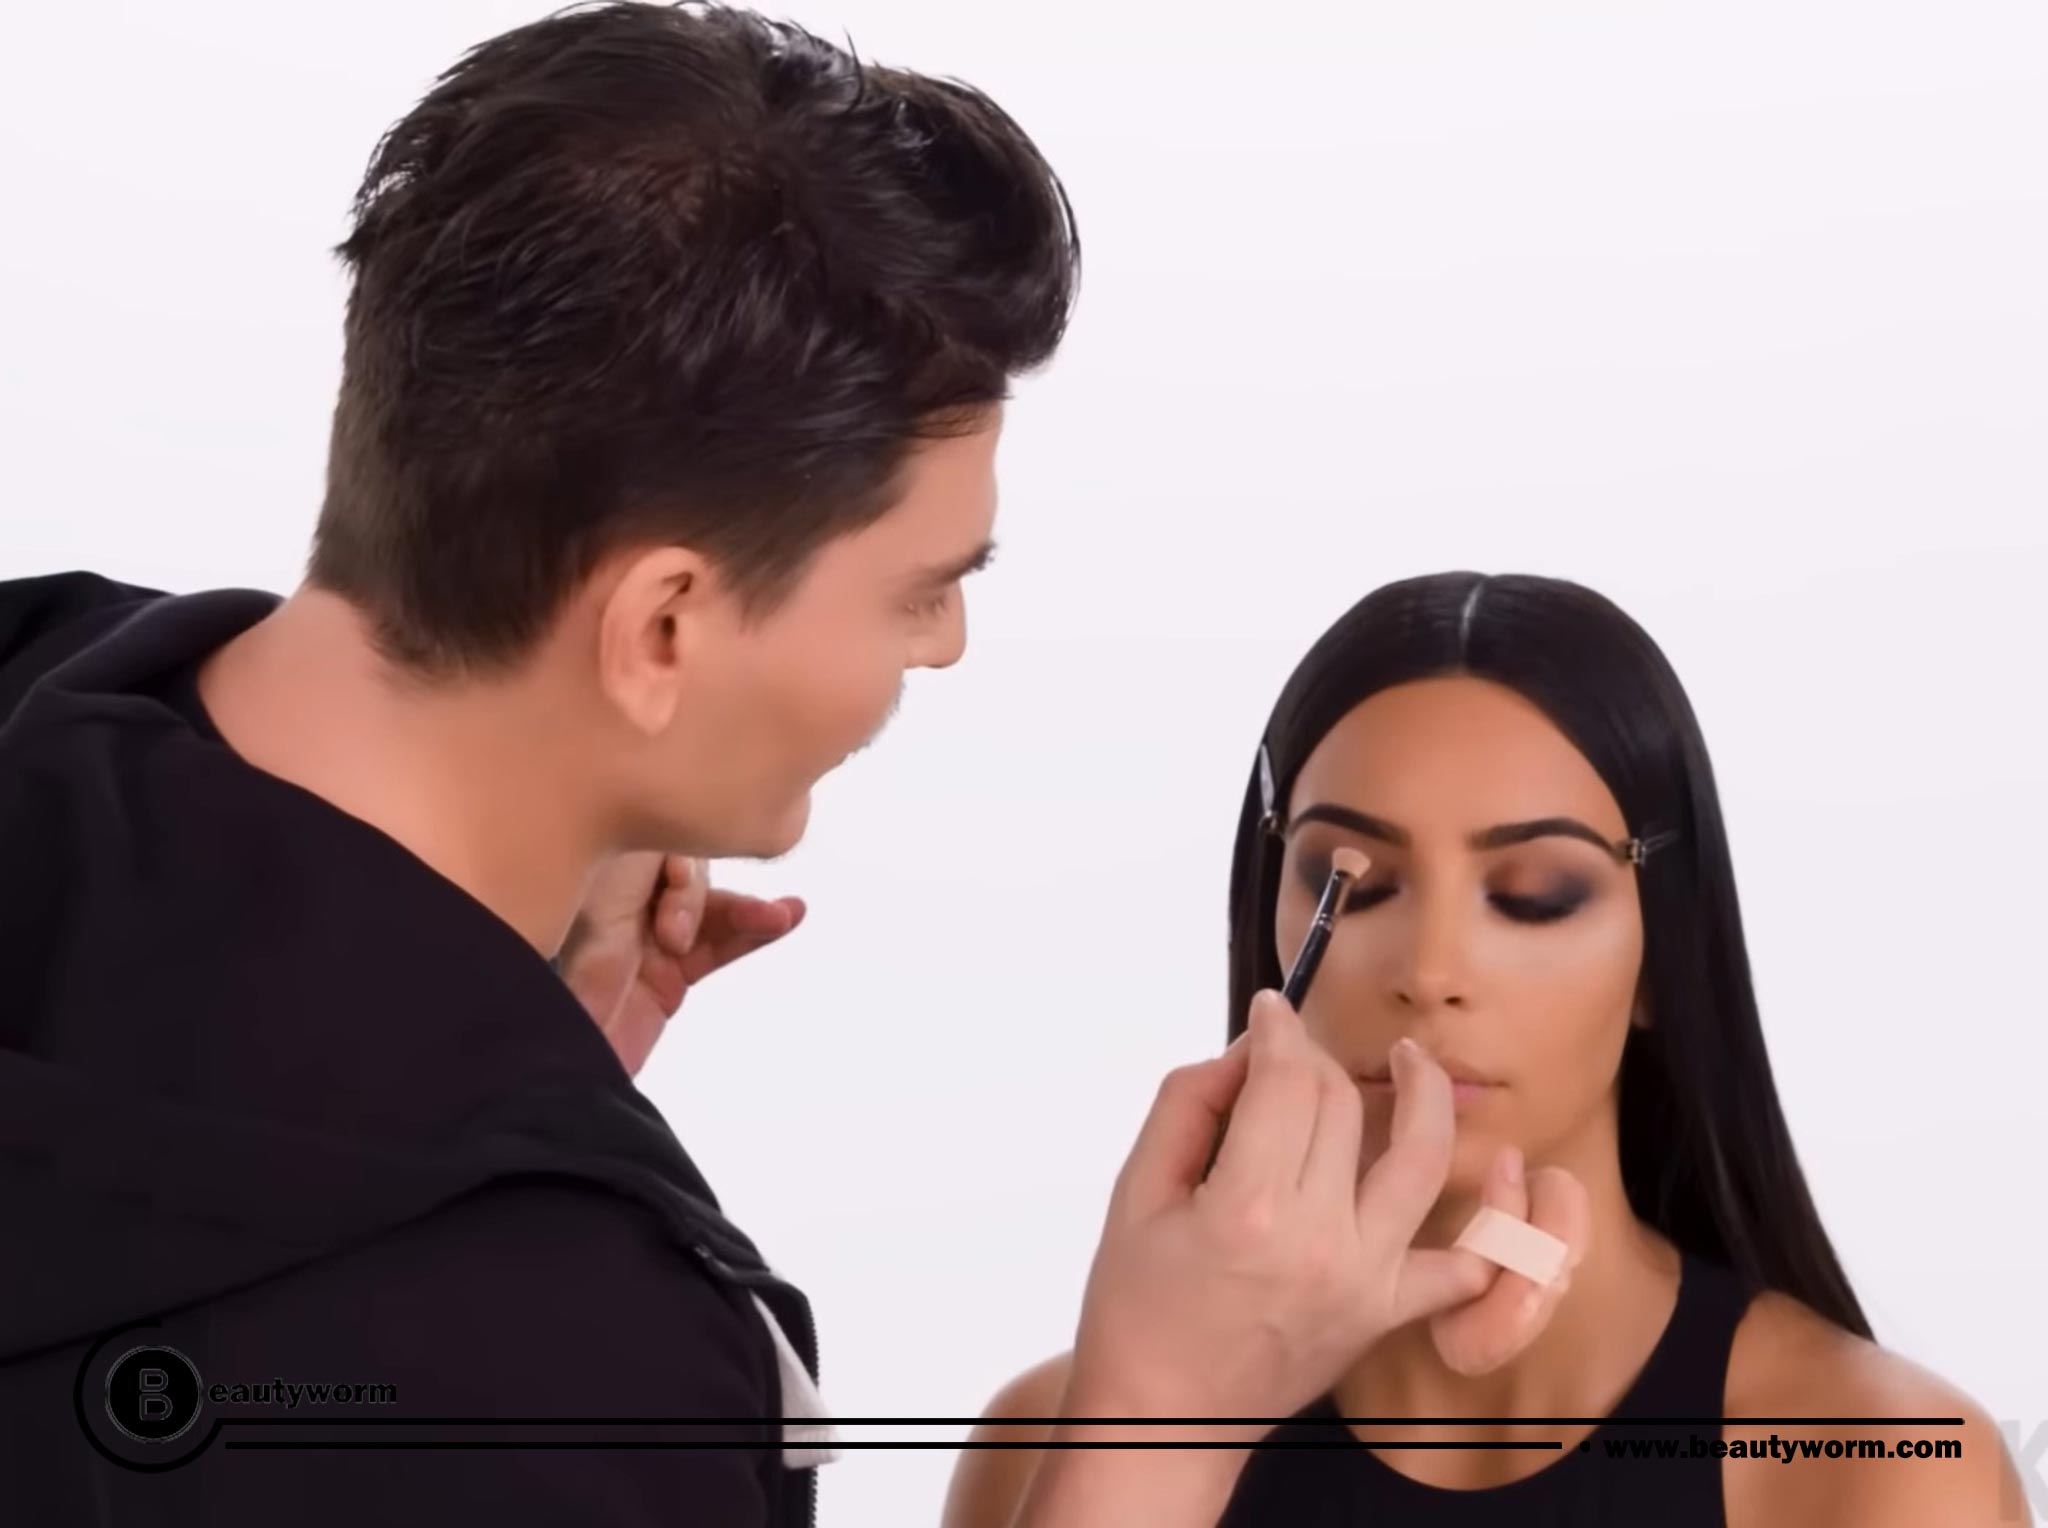 Kim Kardashian proves she's the master of the smokey eye